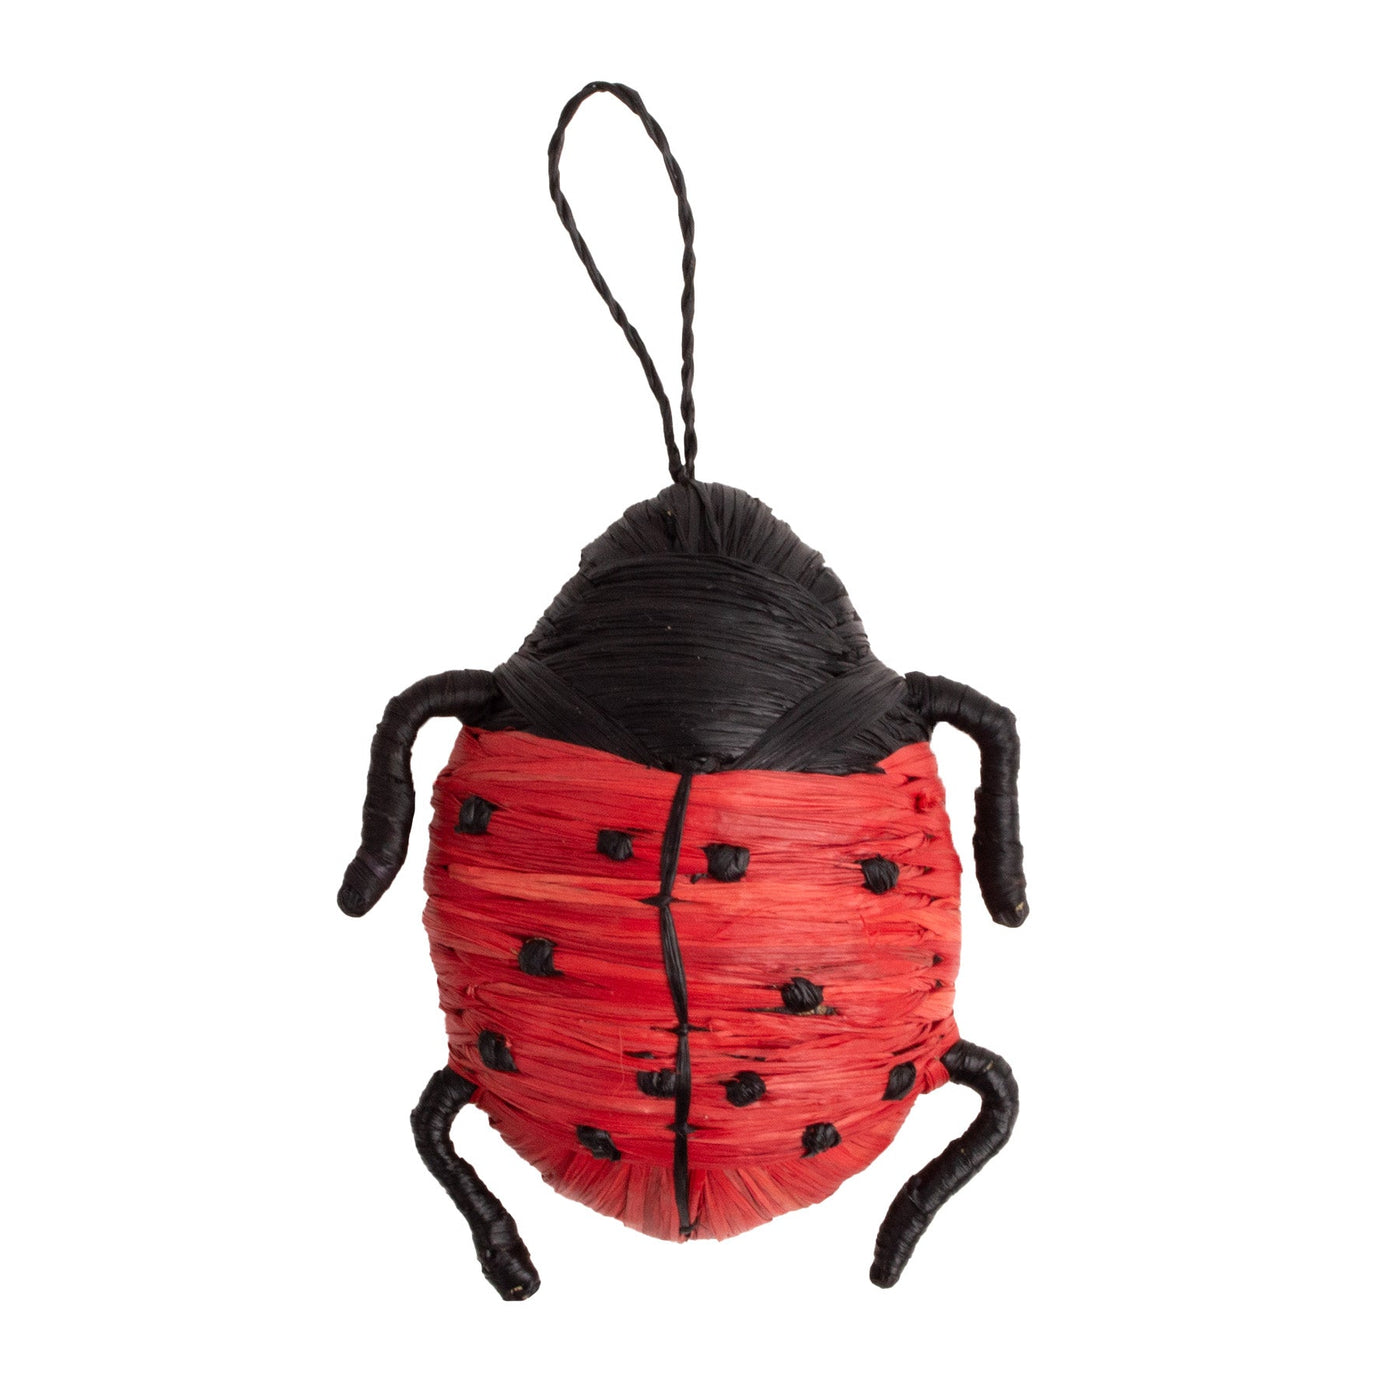 Bloom Ornament - Red Ladybug